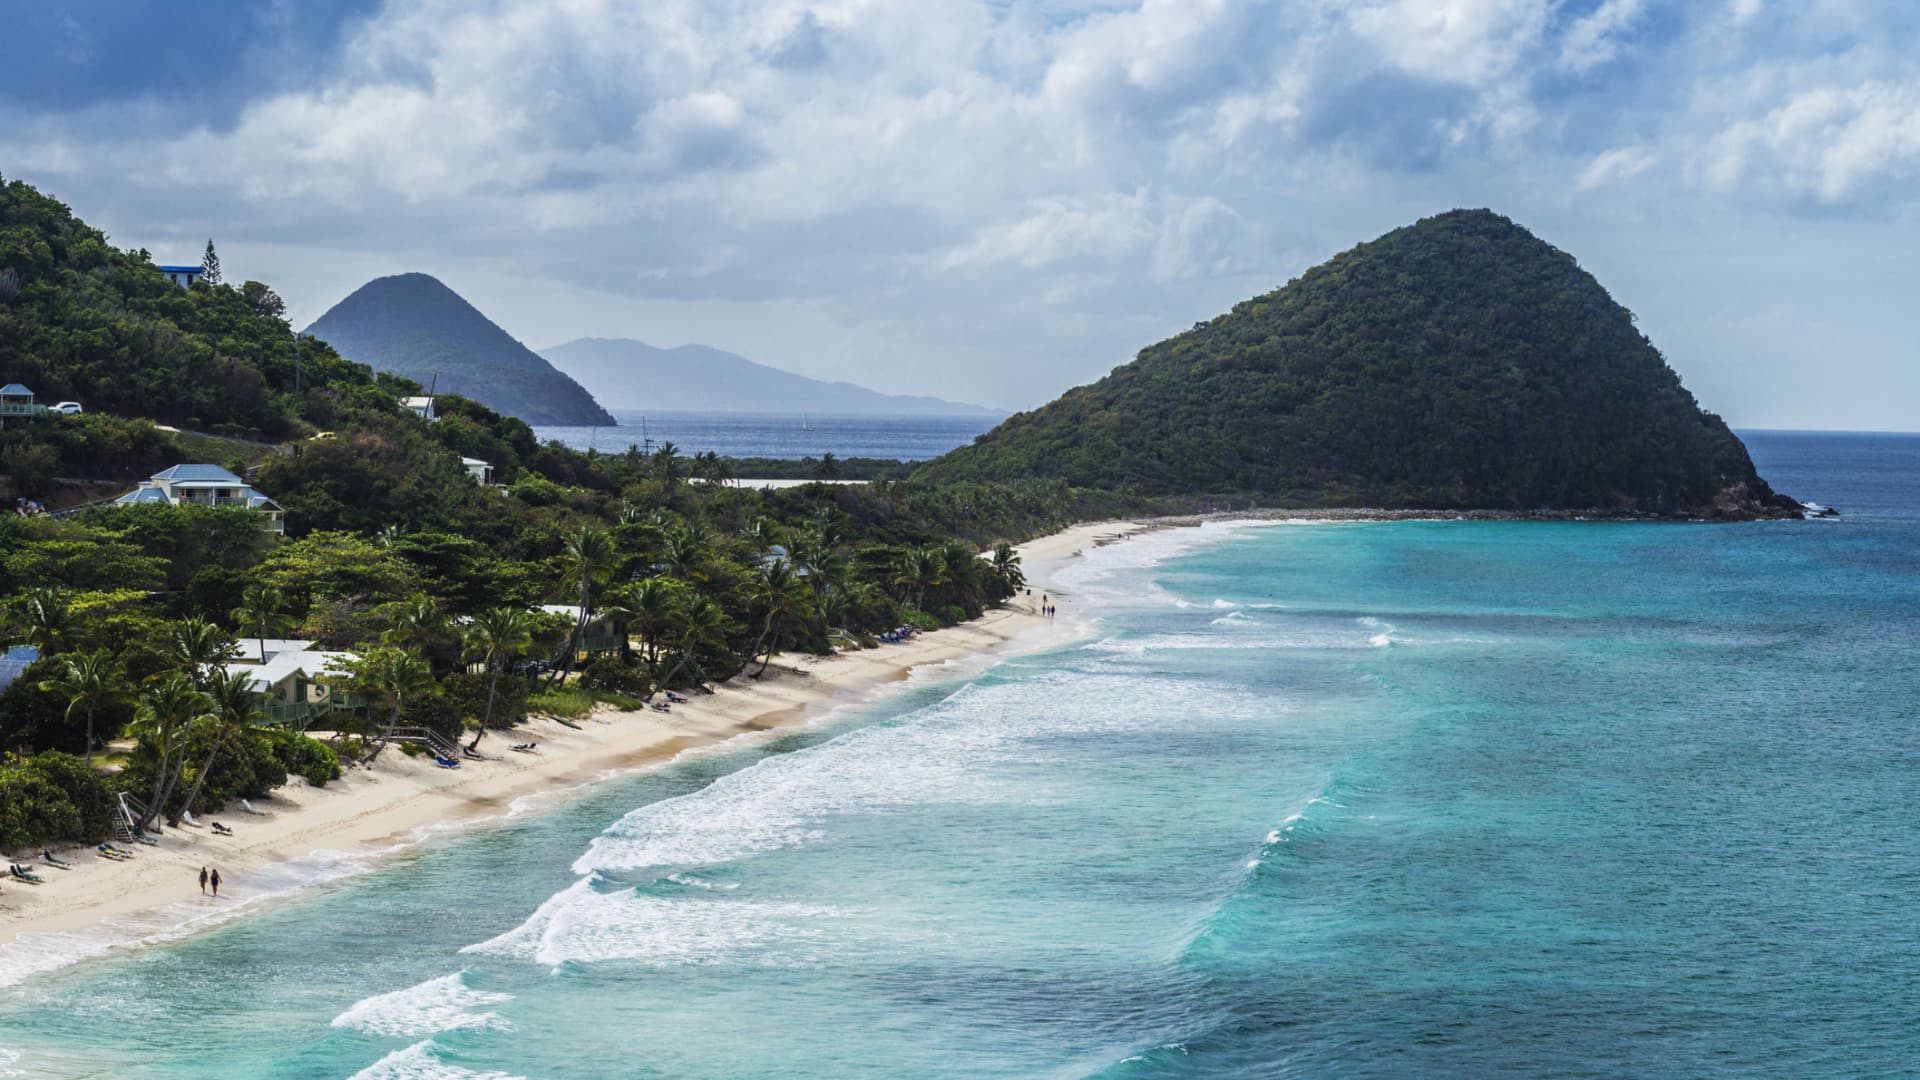 The island of Tortola in the British Virgin Islands.